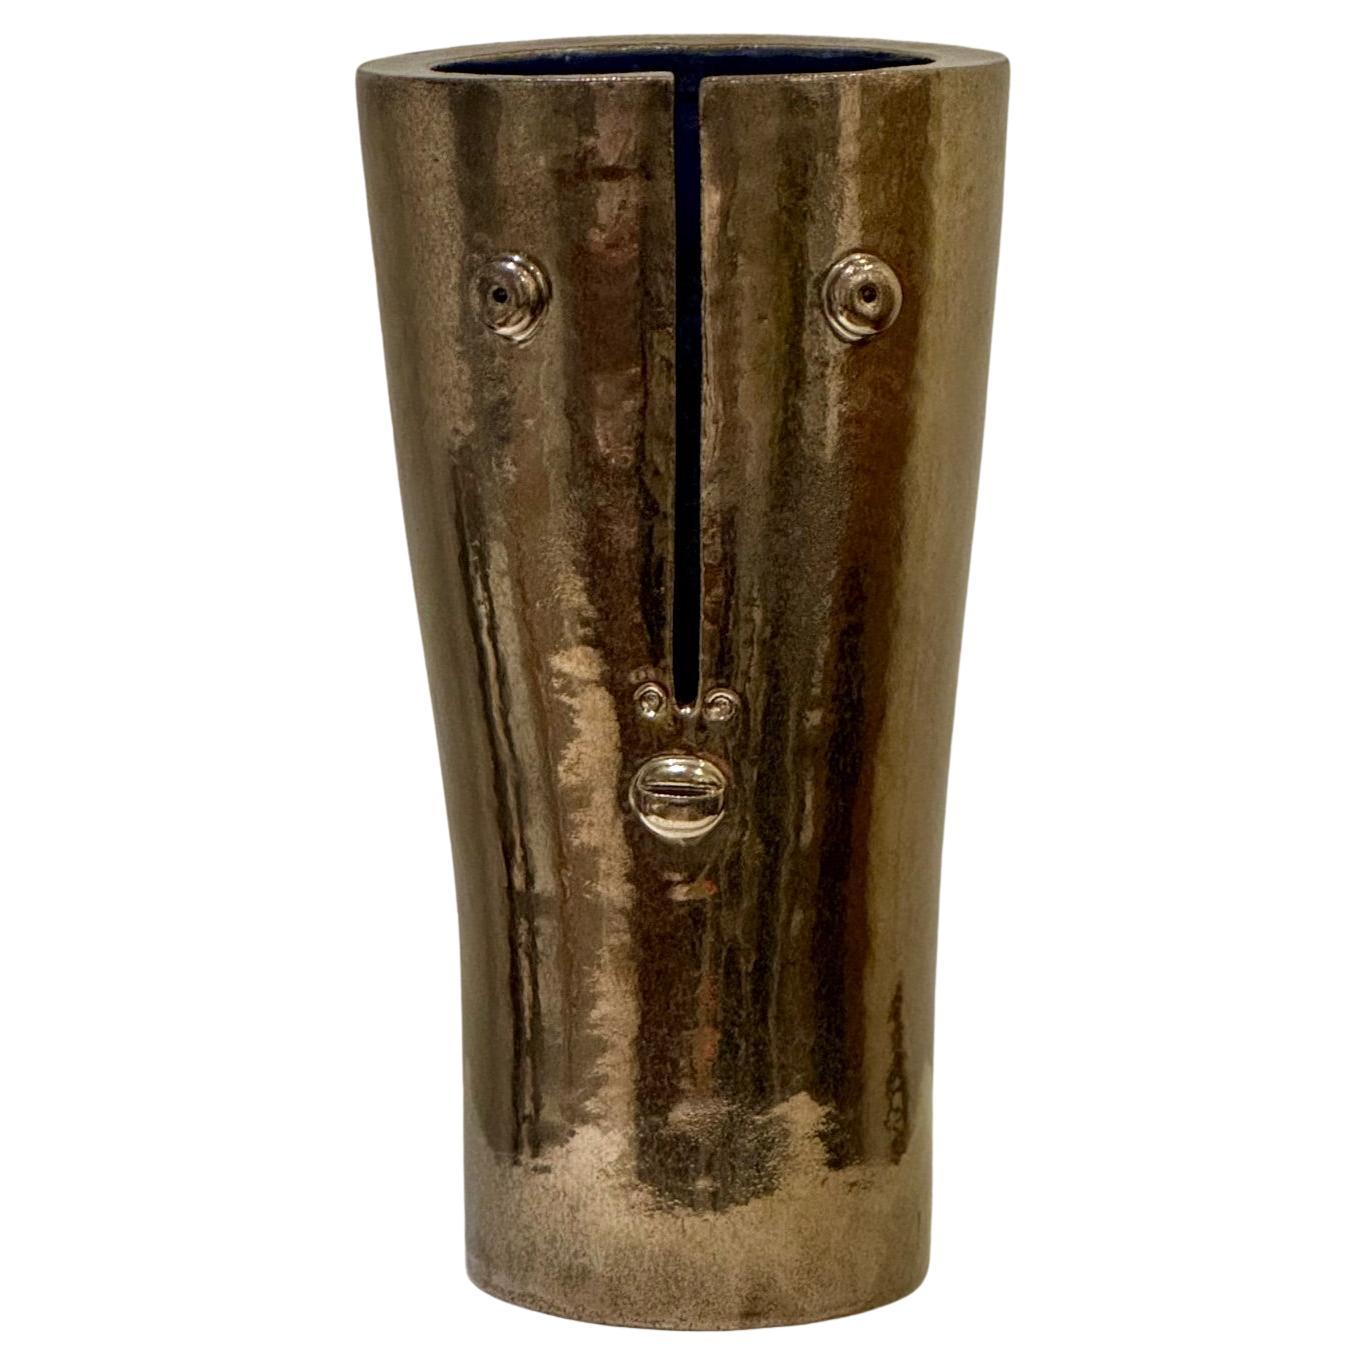 Shiny Gold Ceramic Vase "Golden Idole" Signed by DALO For Sale